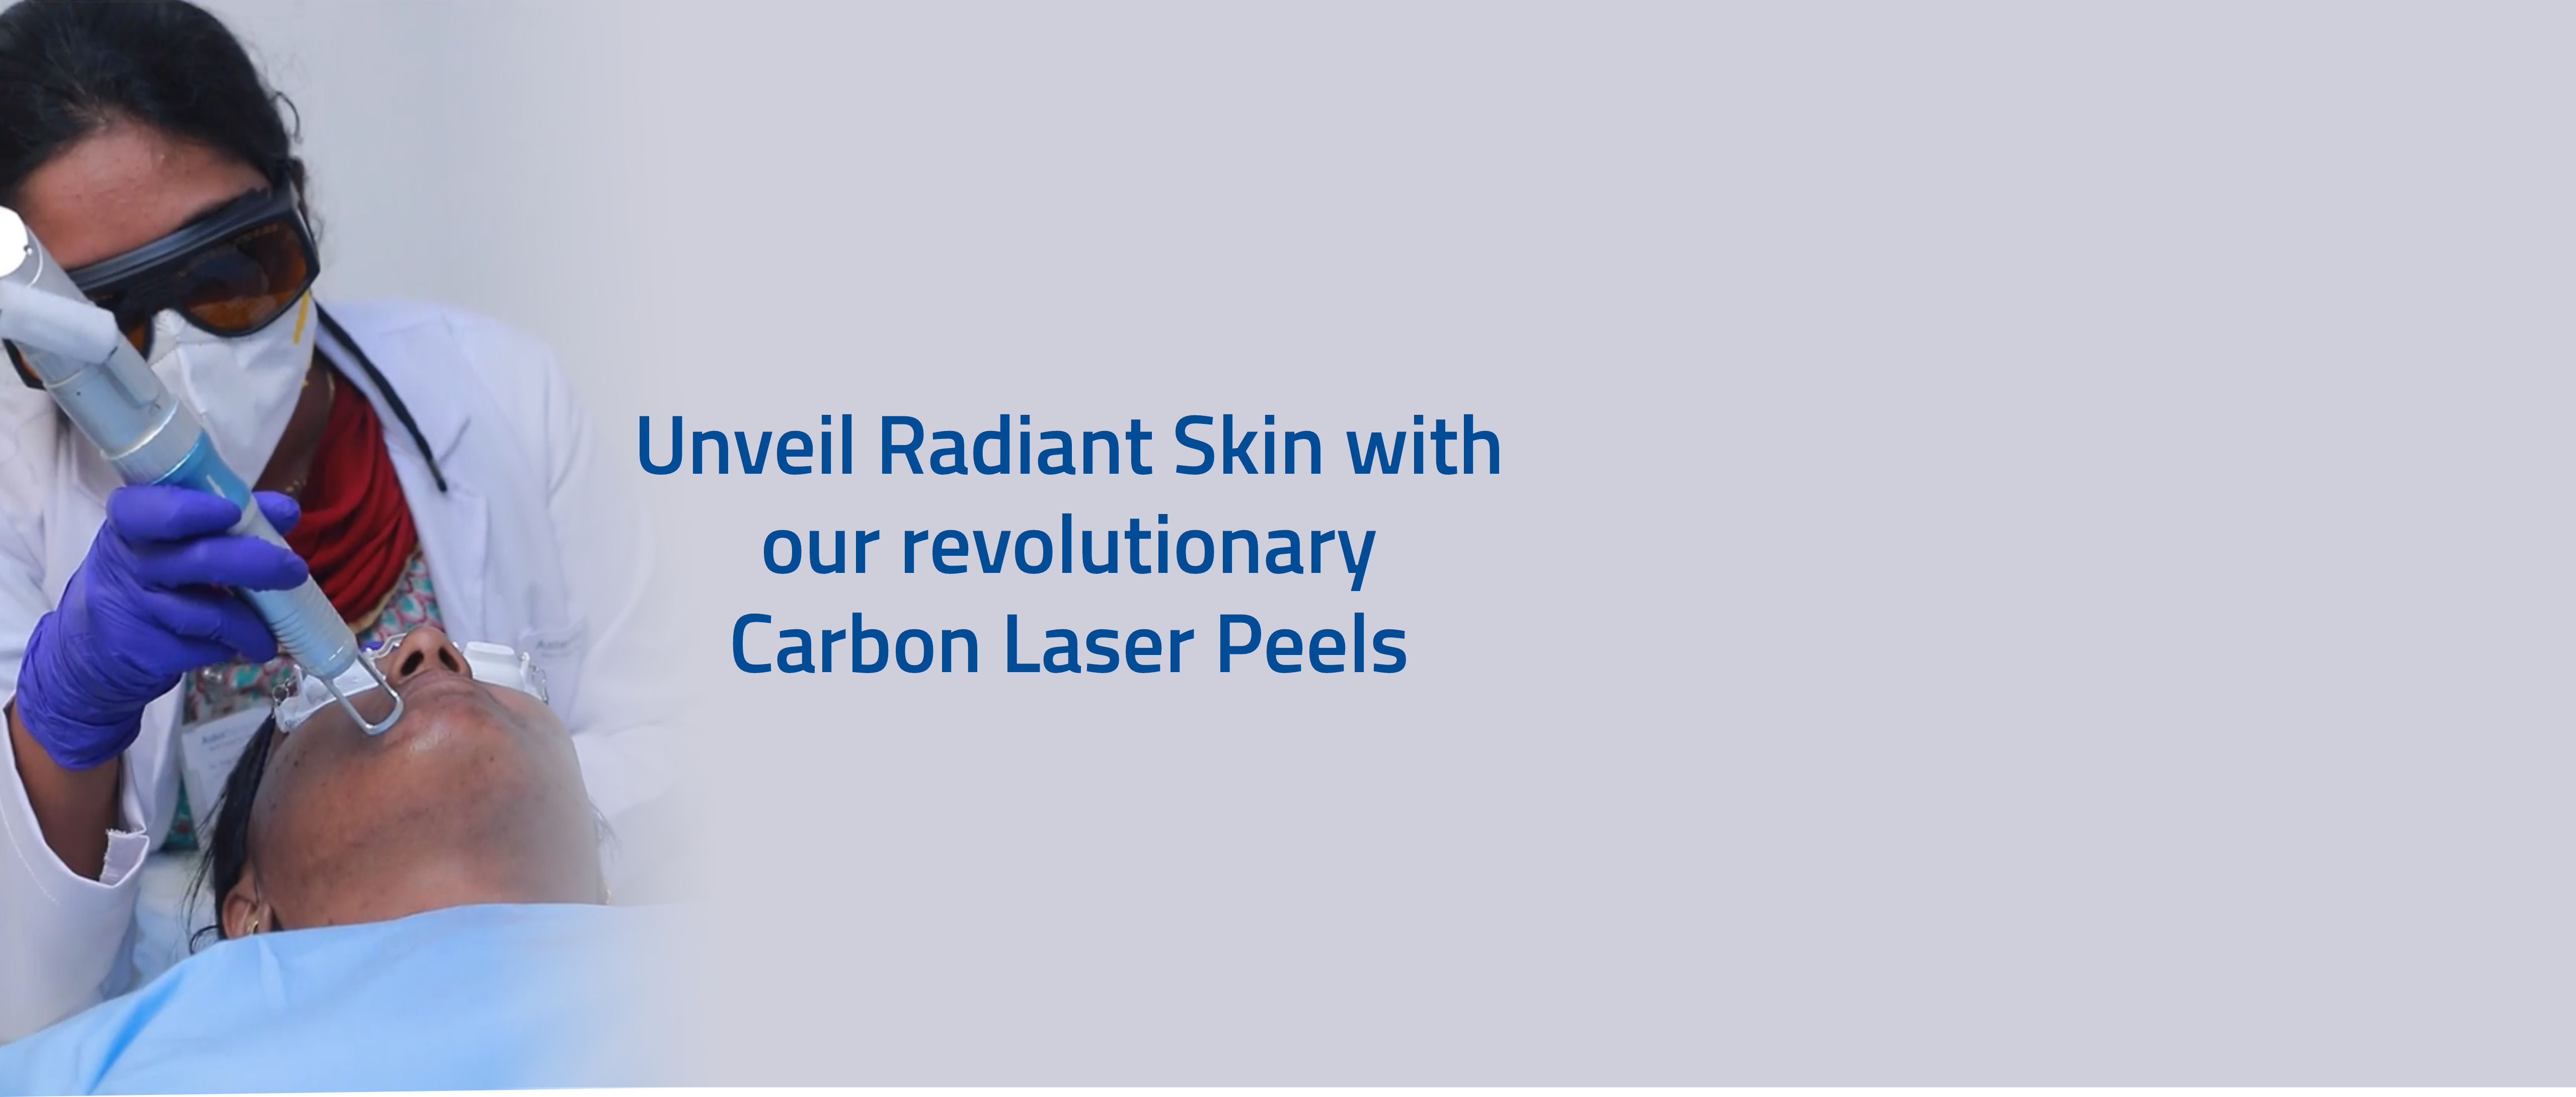 Carbon laser peel